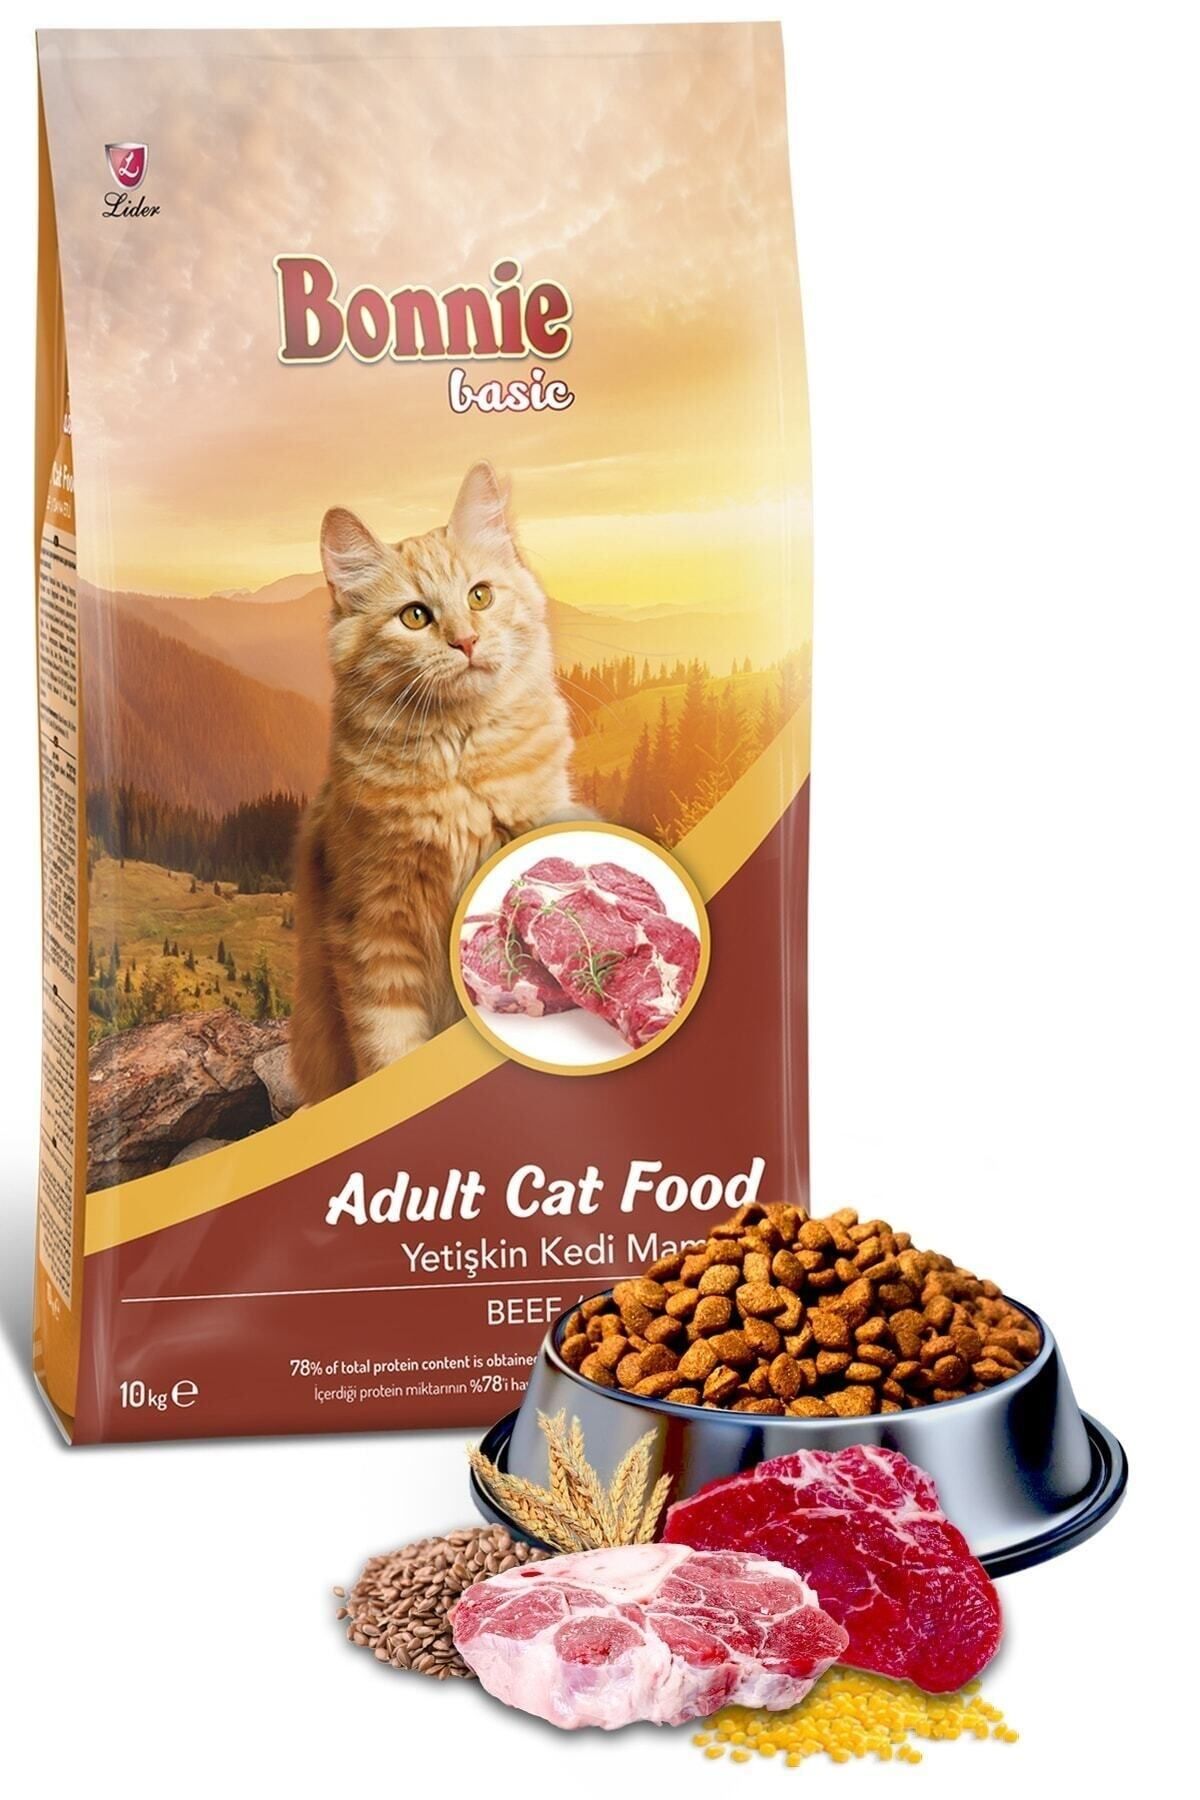 Bonnie Biftekli Yetişkin Kedi Maması 10 Kg